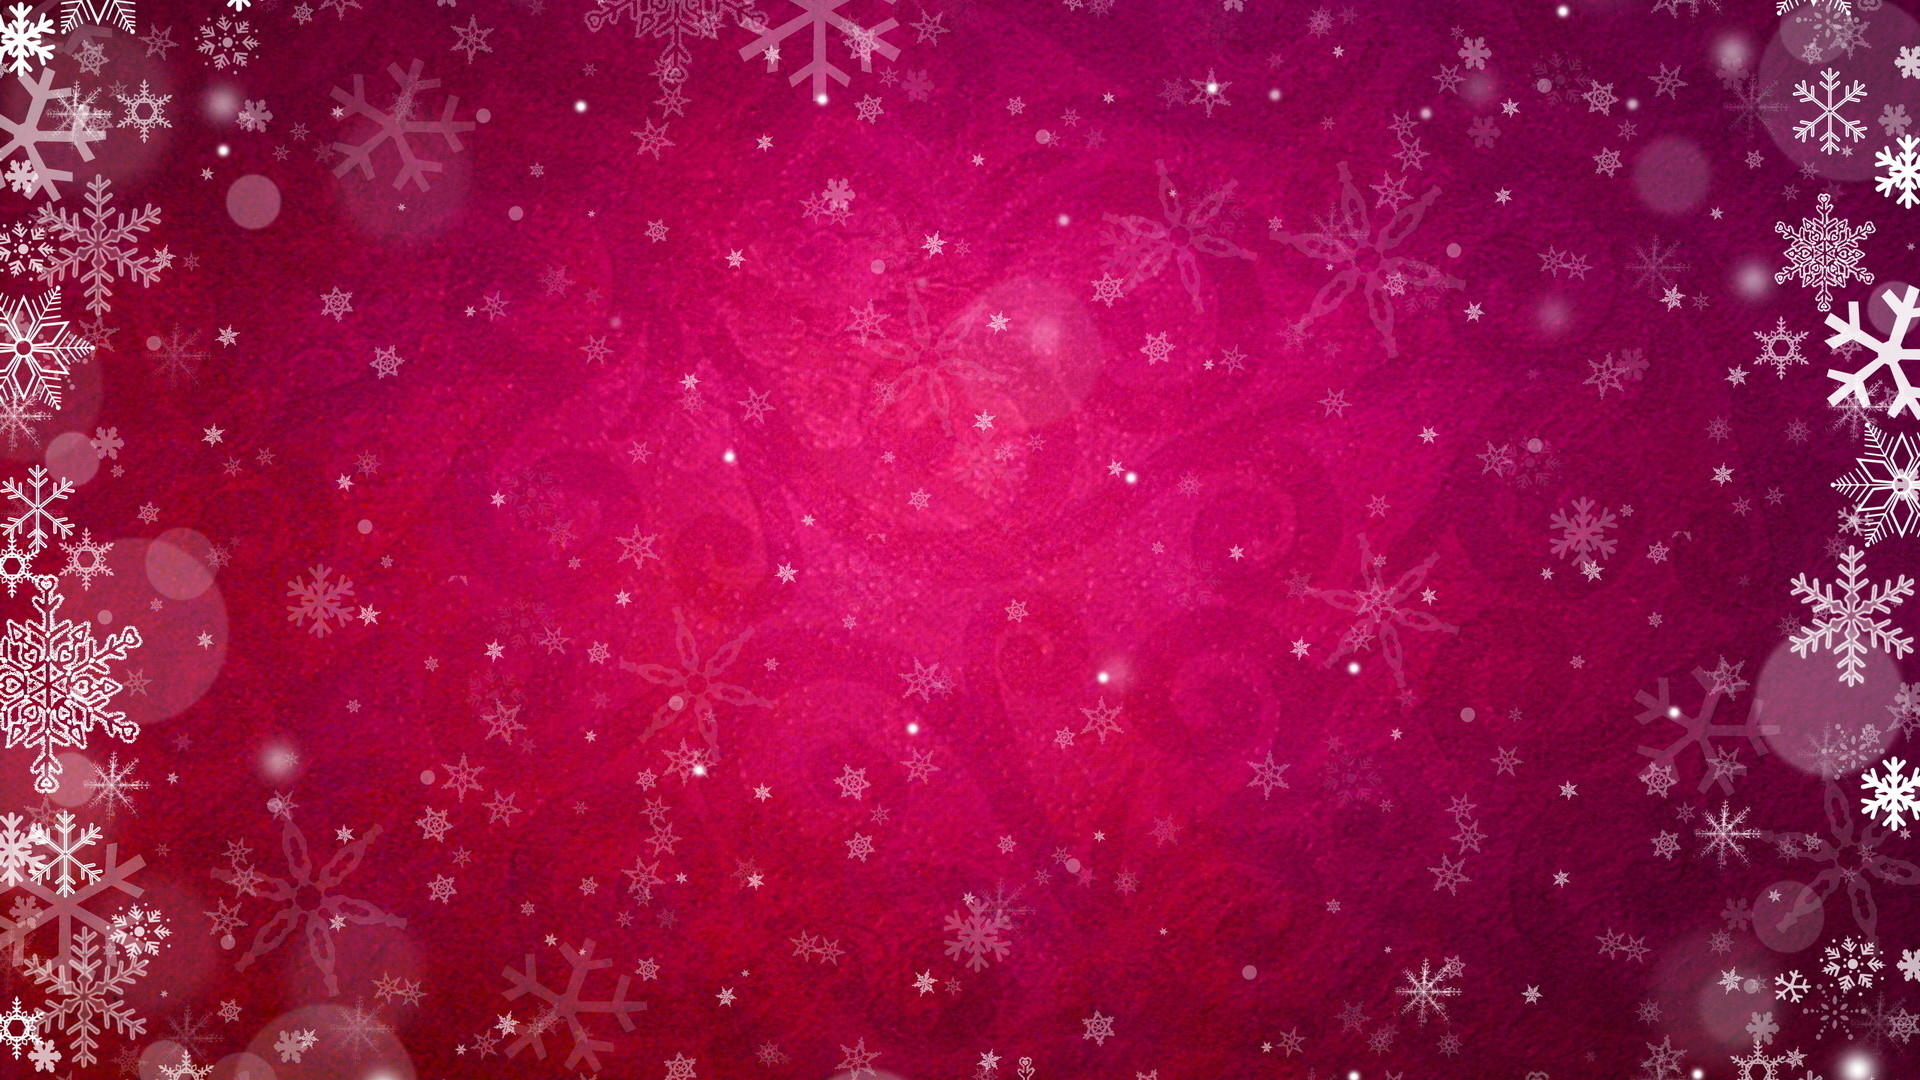 1920x1080 Snowflake Pink Wallpaper as Background. Download